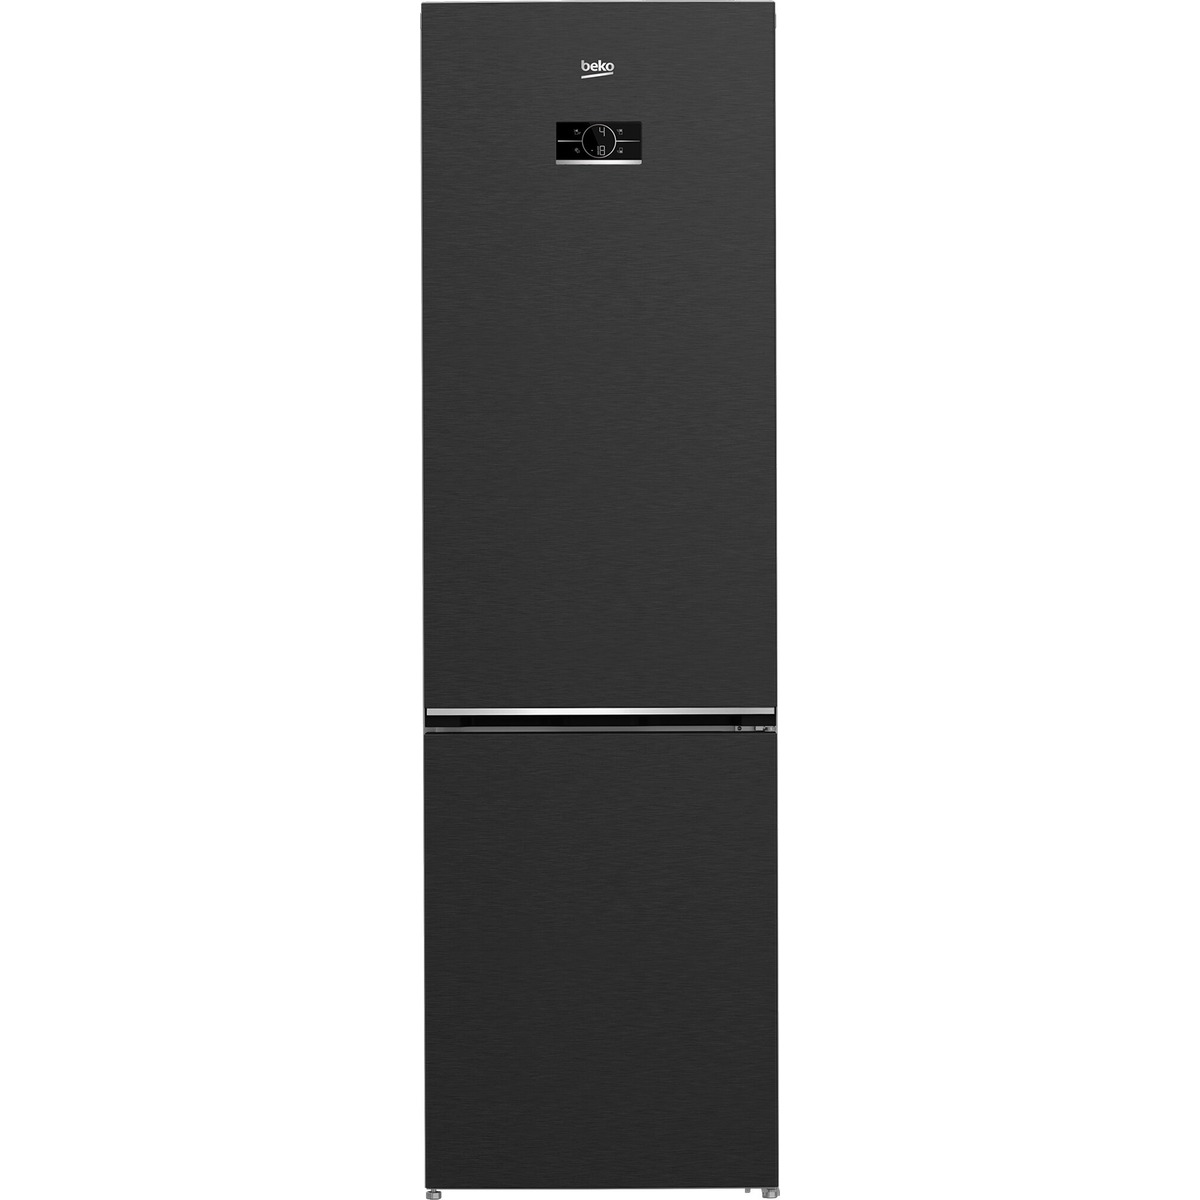 Холодильник Beko B3DRCNK402HXBR (Цвет: Black)